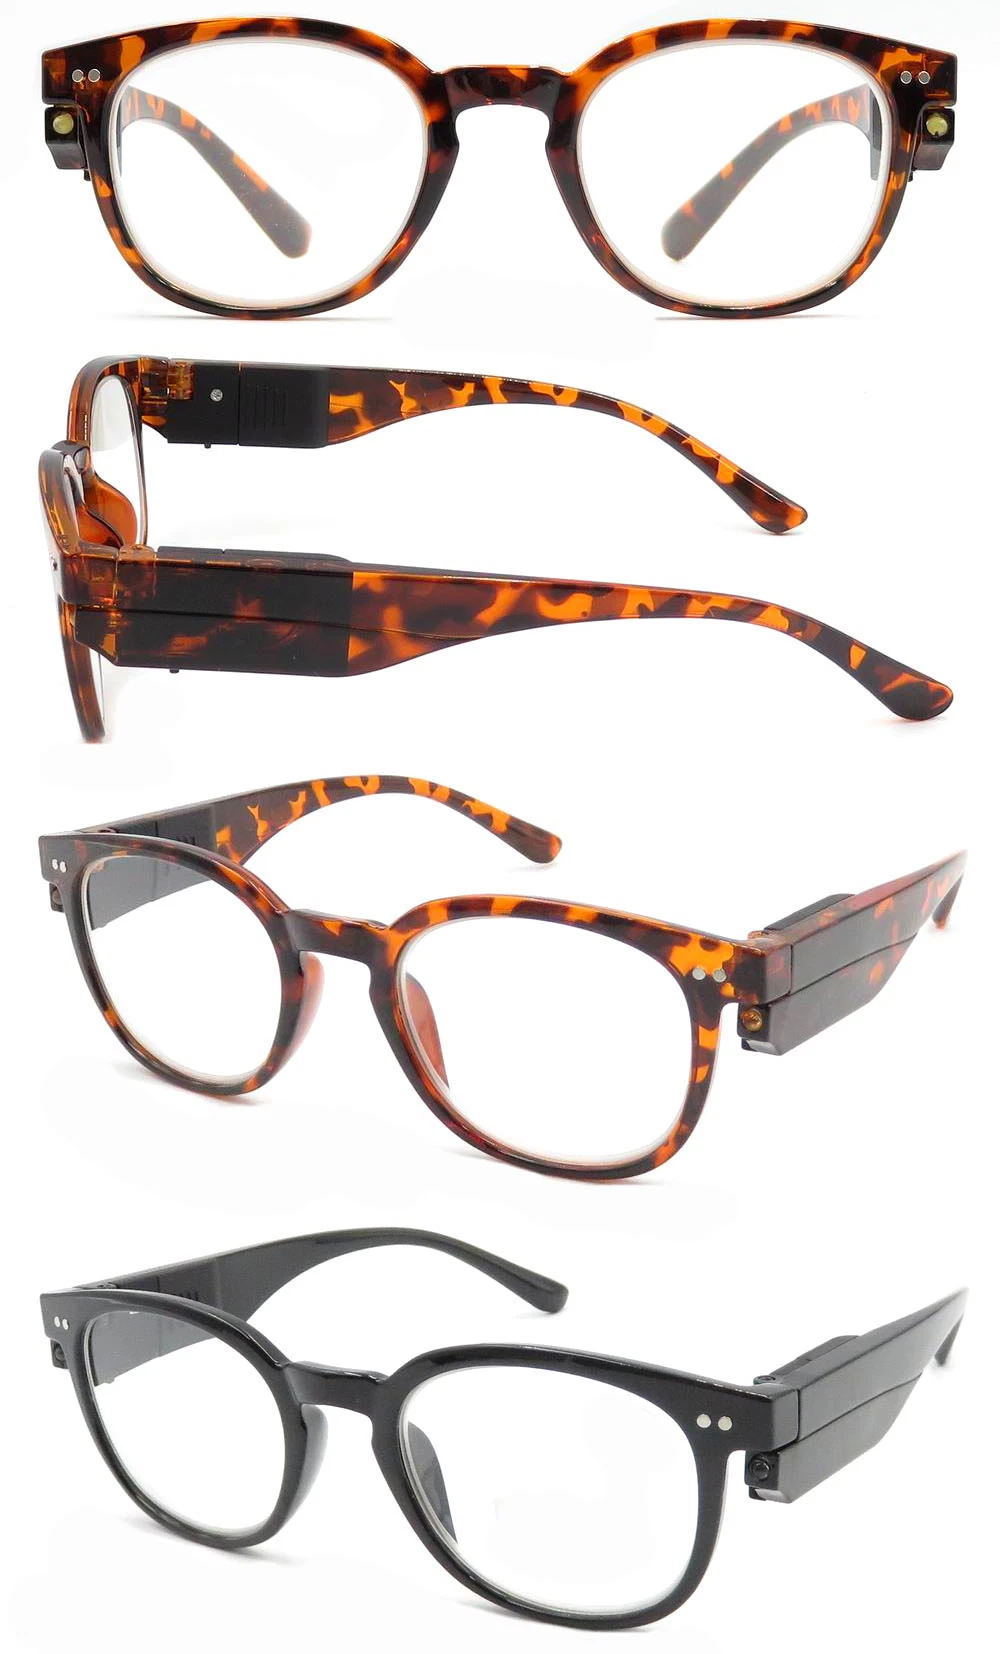 LED Powerful Reading Light Multi Strength Glasses with Magnifier up at Night Unisex Eyeglasses Eyewear